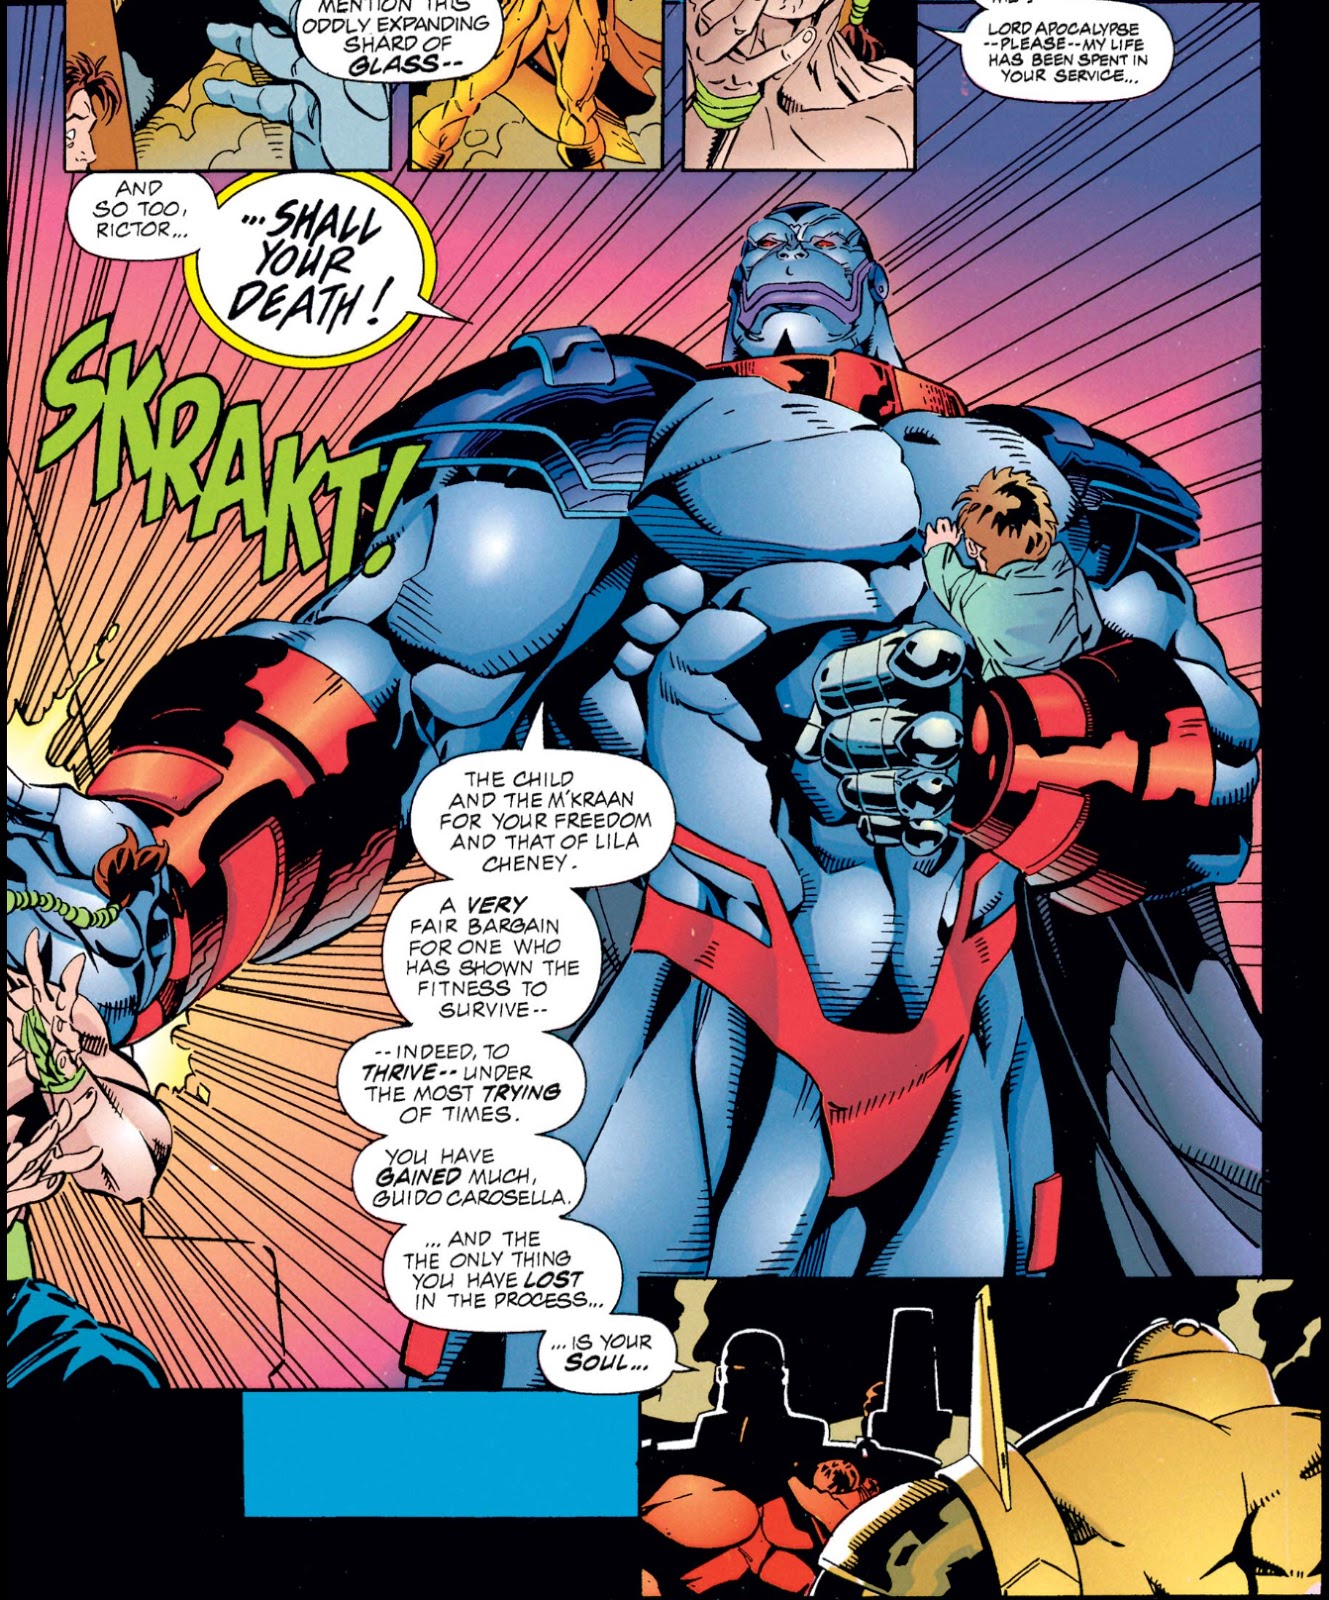 Horseman of Death Gambit/Agentk, Marvel: Avengers Alliance Fanfic Universe  Wiki